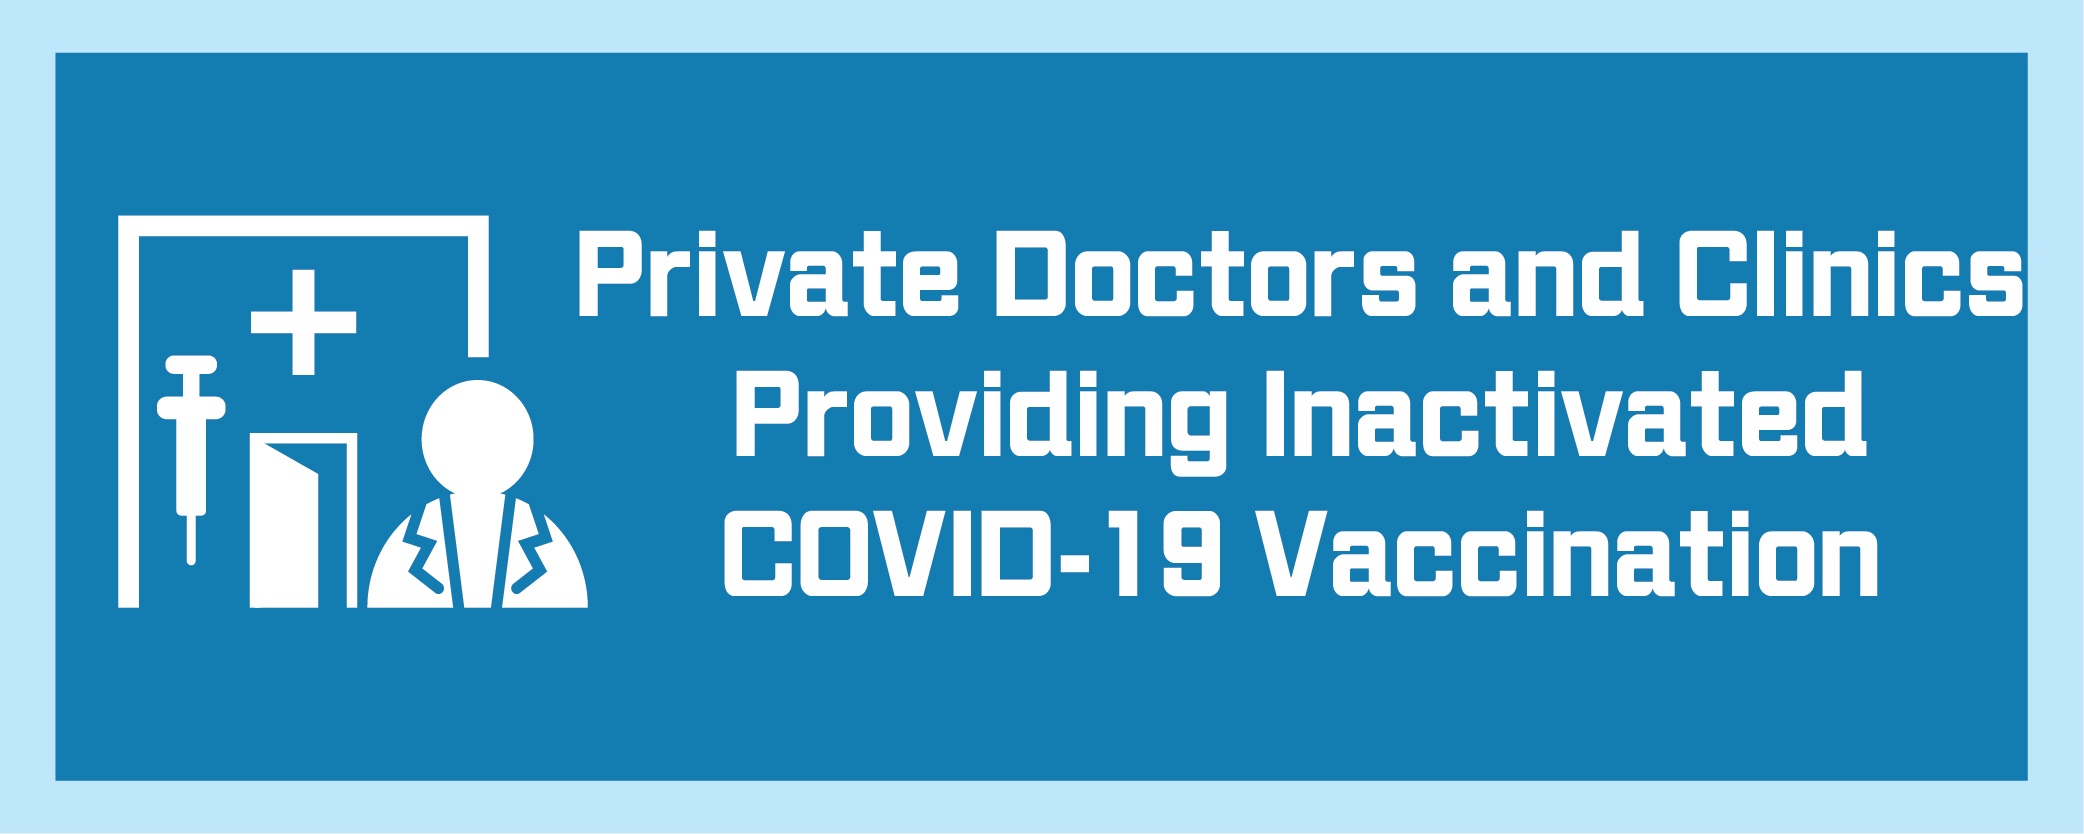 Private Doctors and Clinics Providing Sinovac Vaccination 